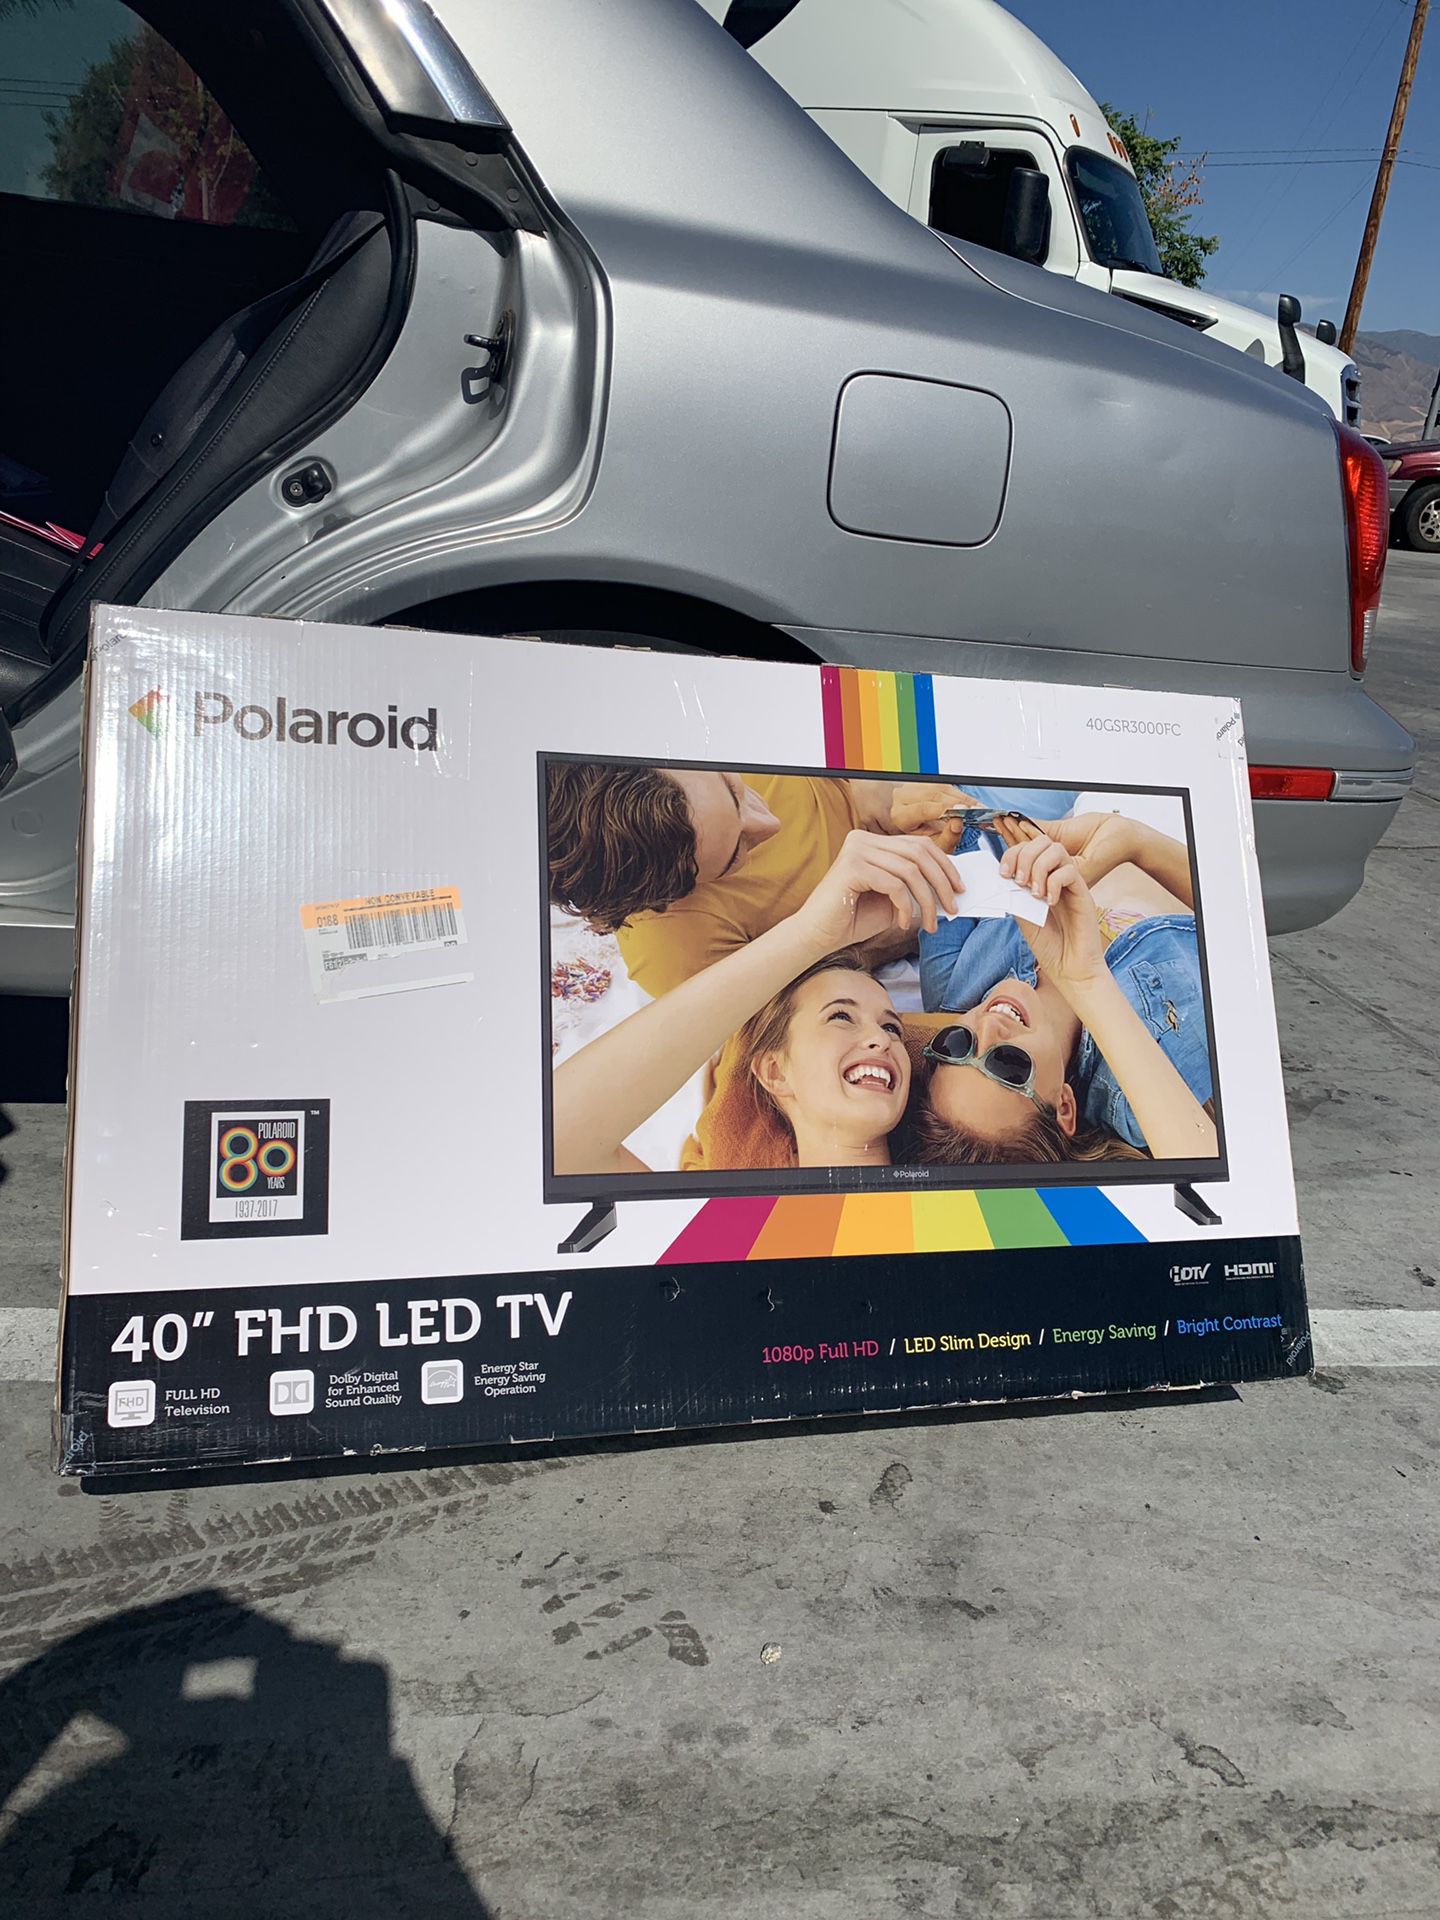 40 inch led Polaroid tv